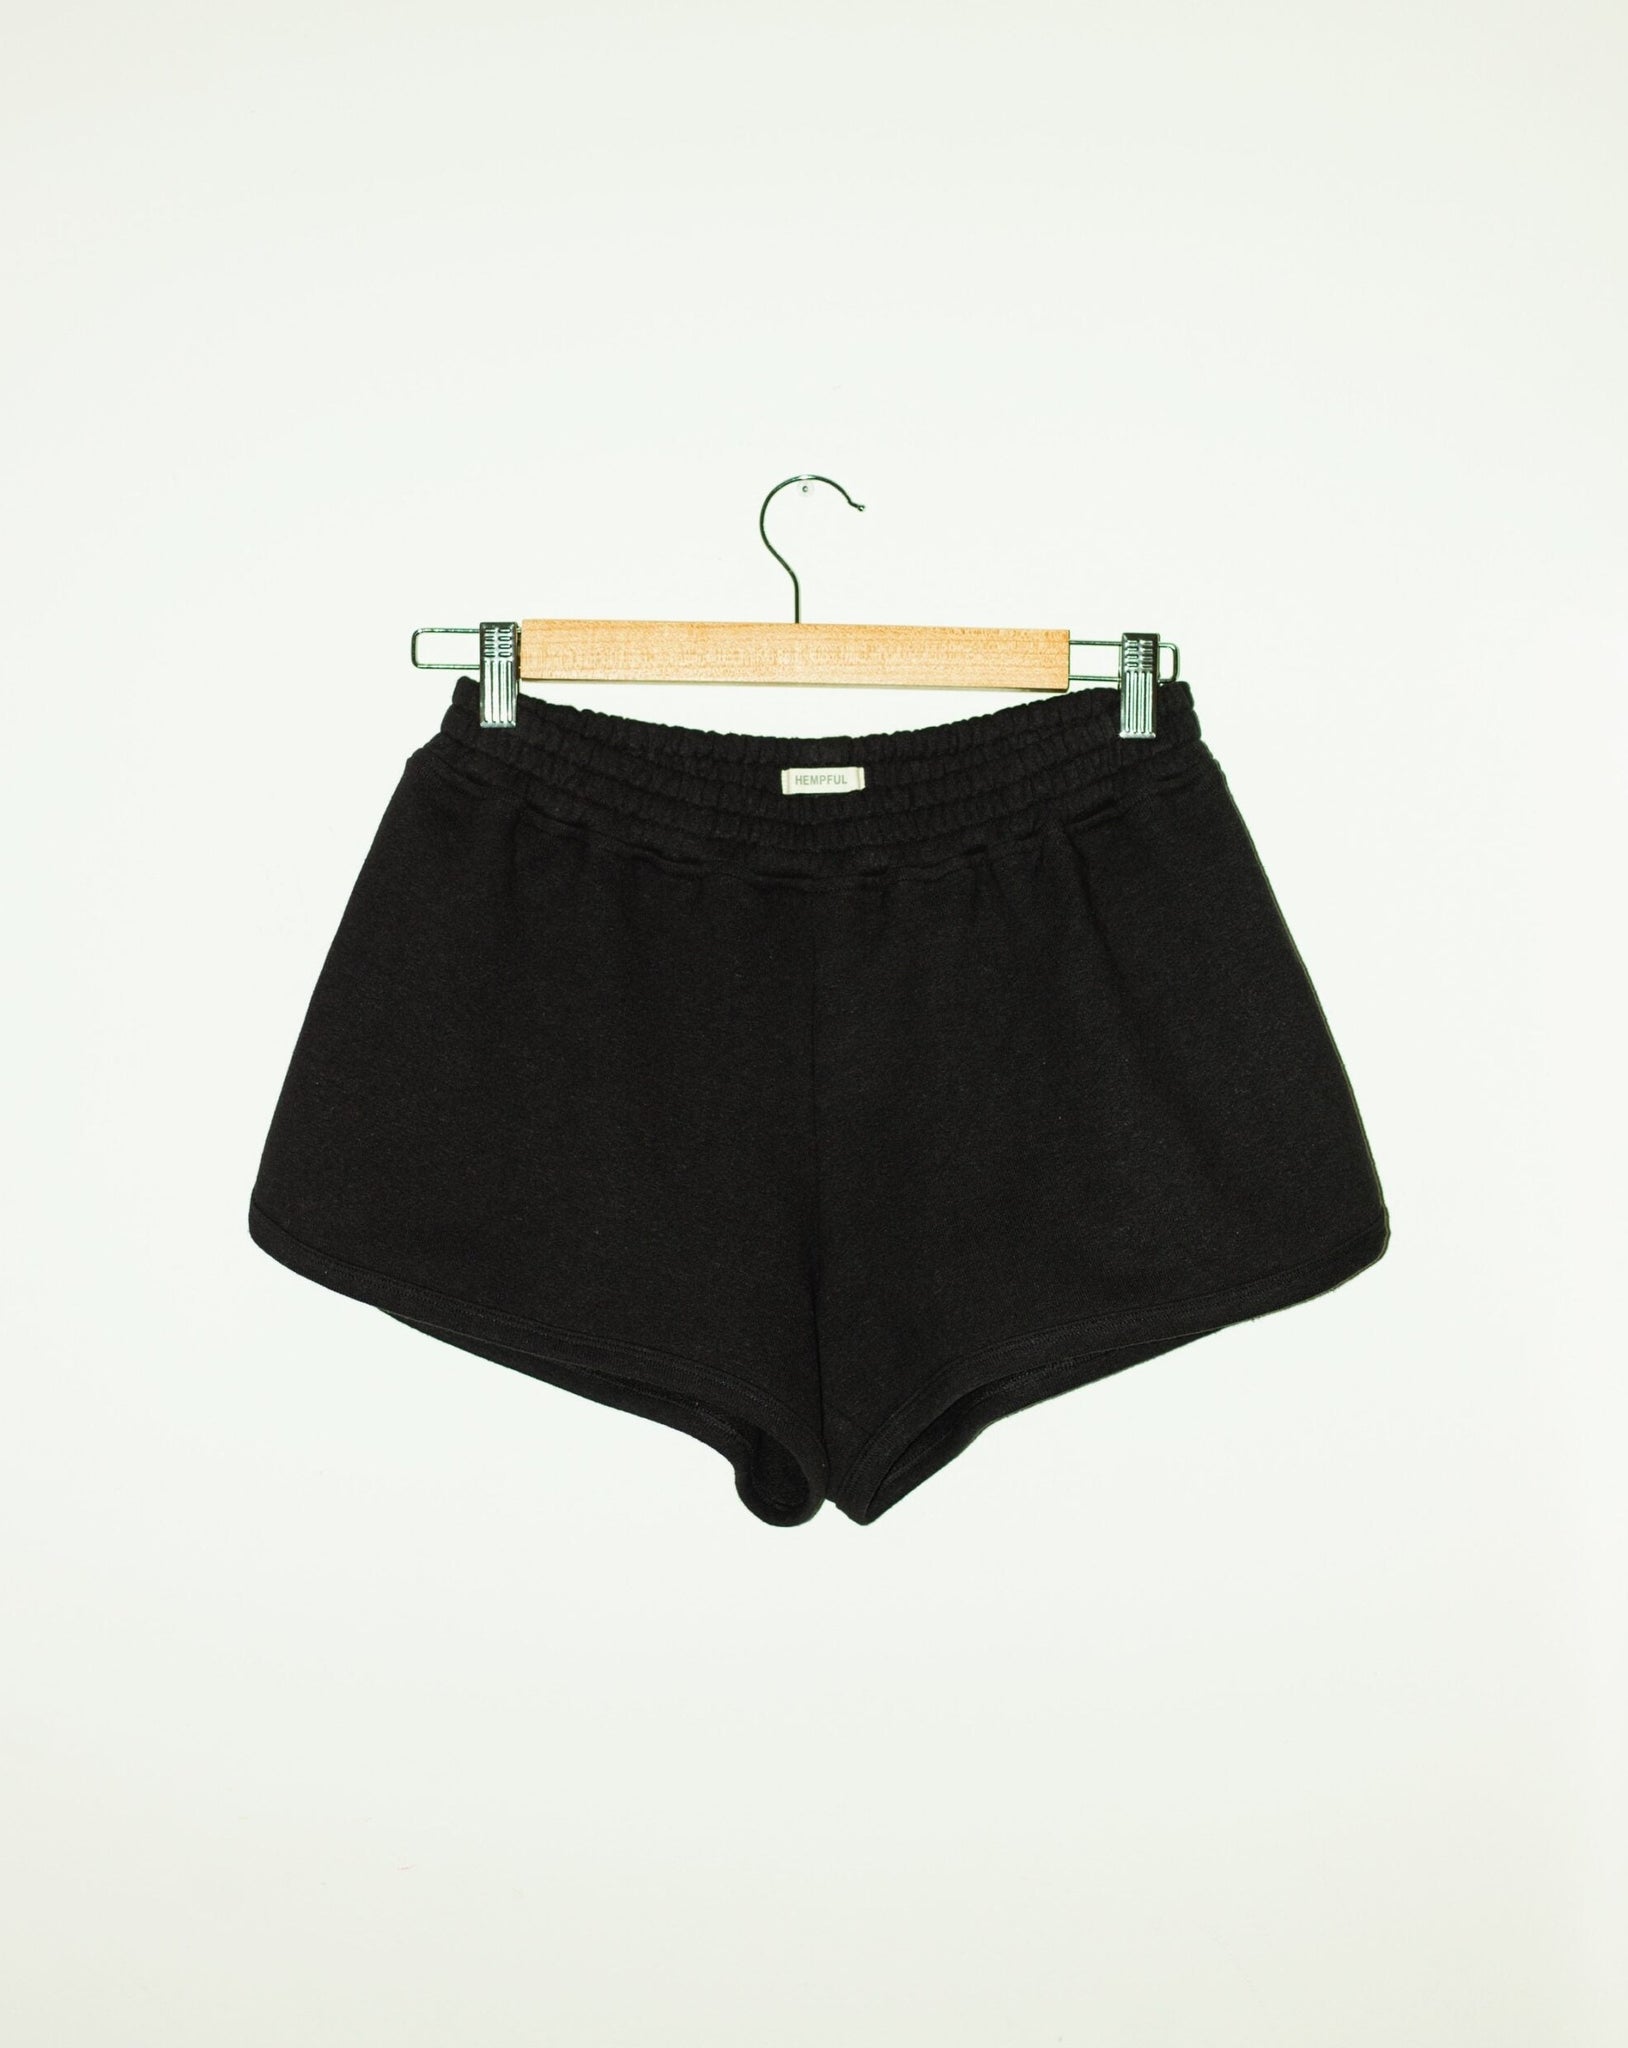 Cindy shorts by Hempful